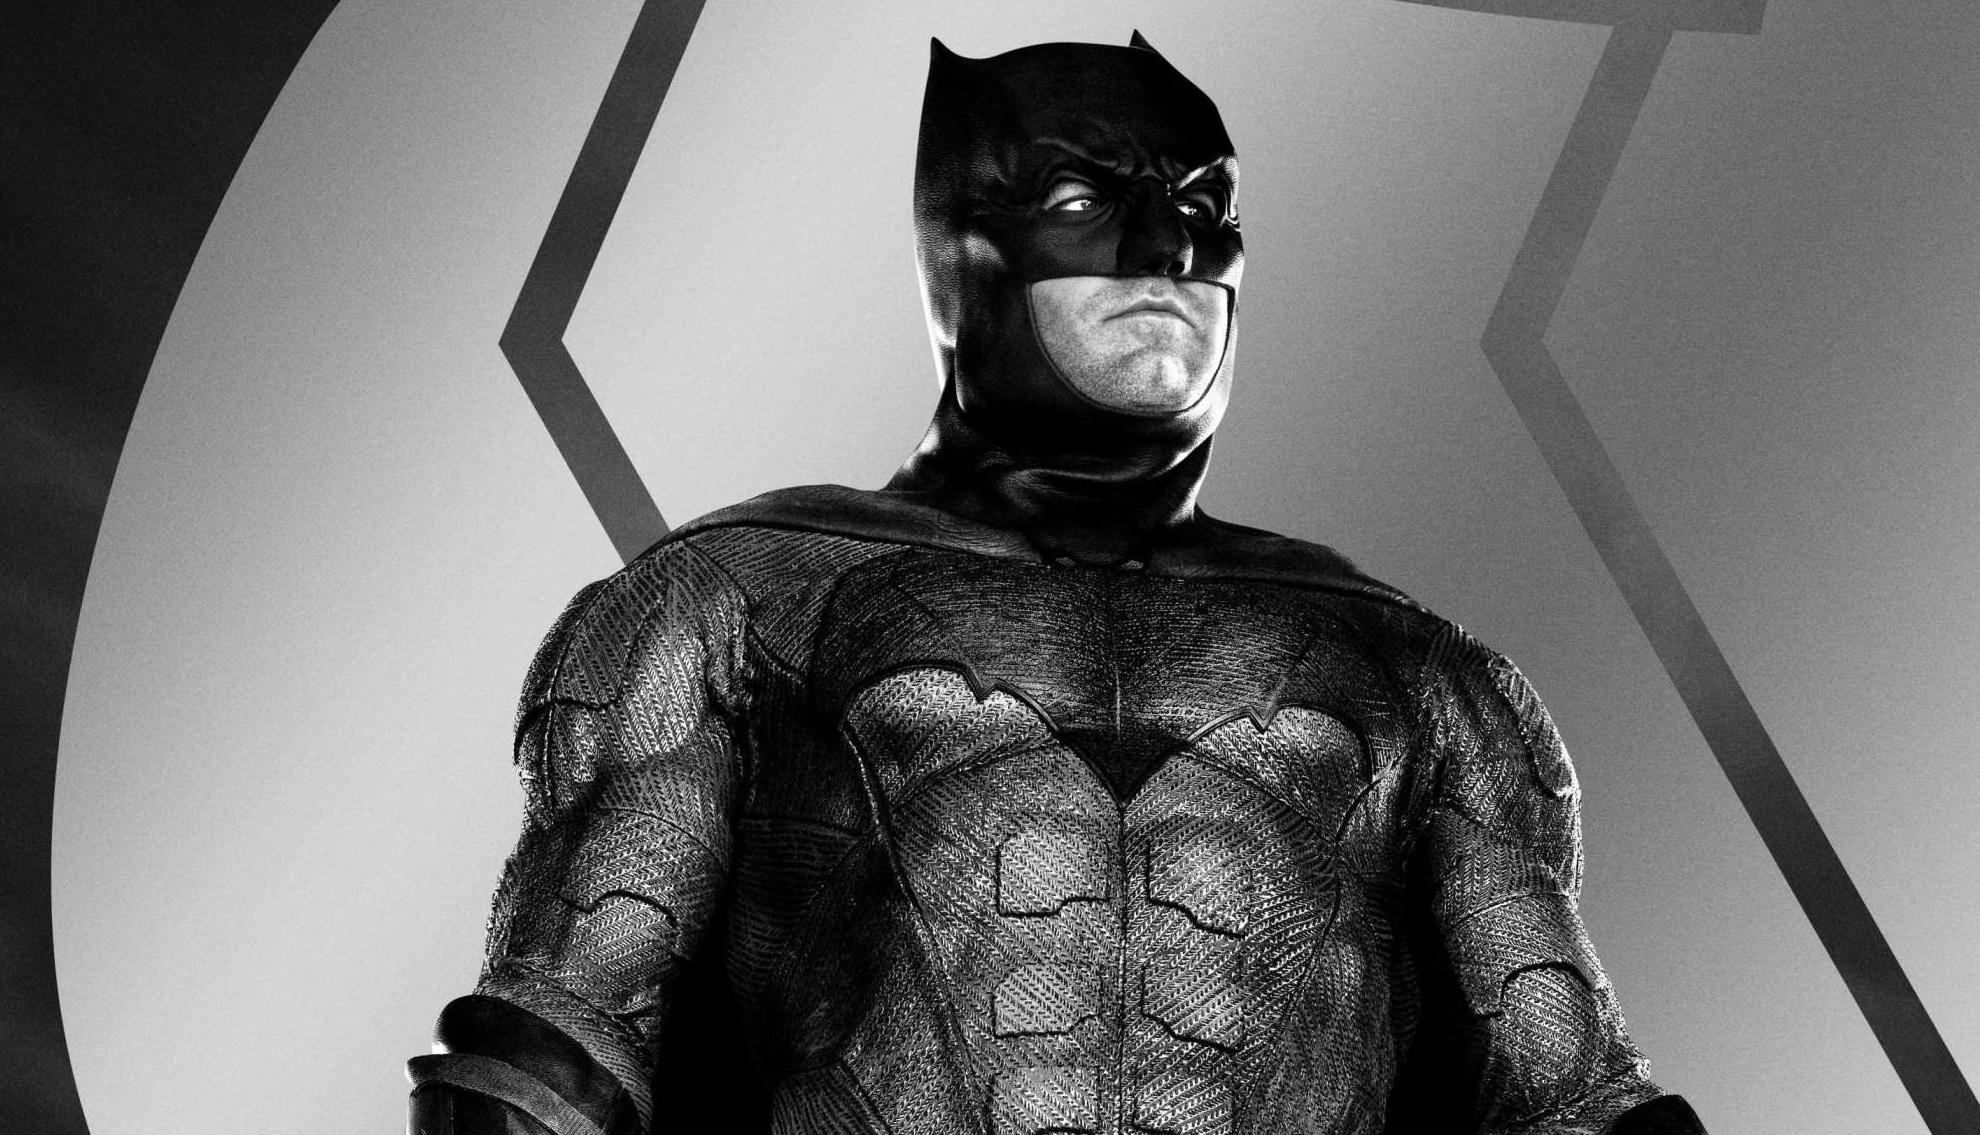 Ben Affleck's Batman looks badass in new 'Justice League' Snyder Cut poster  | GMA News Online